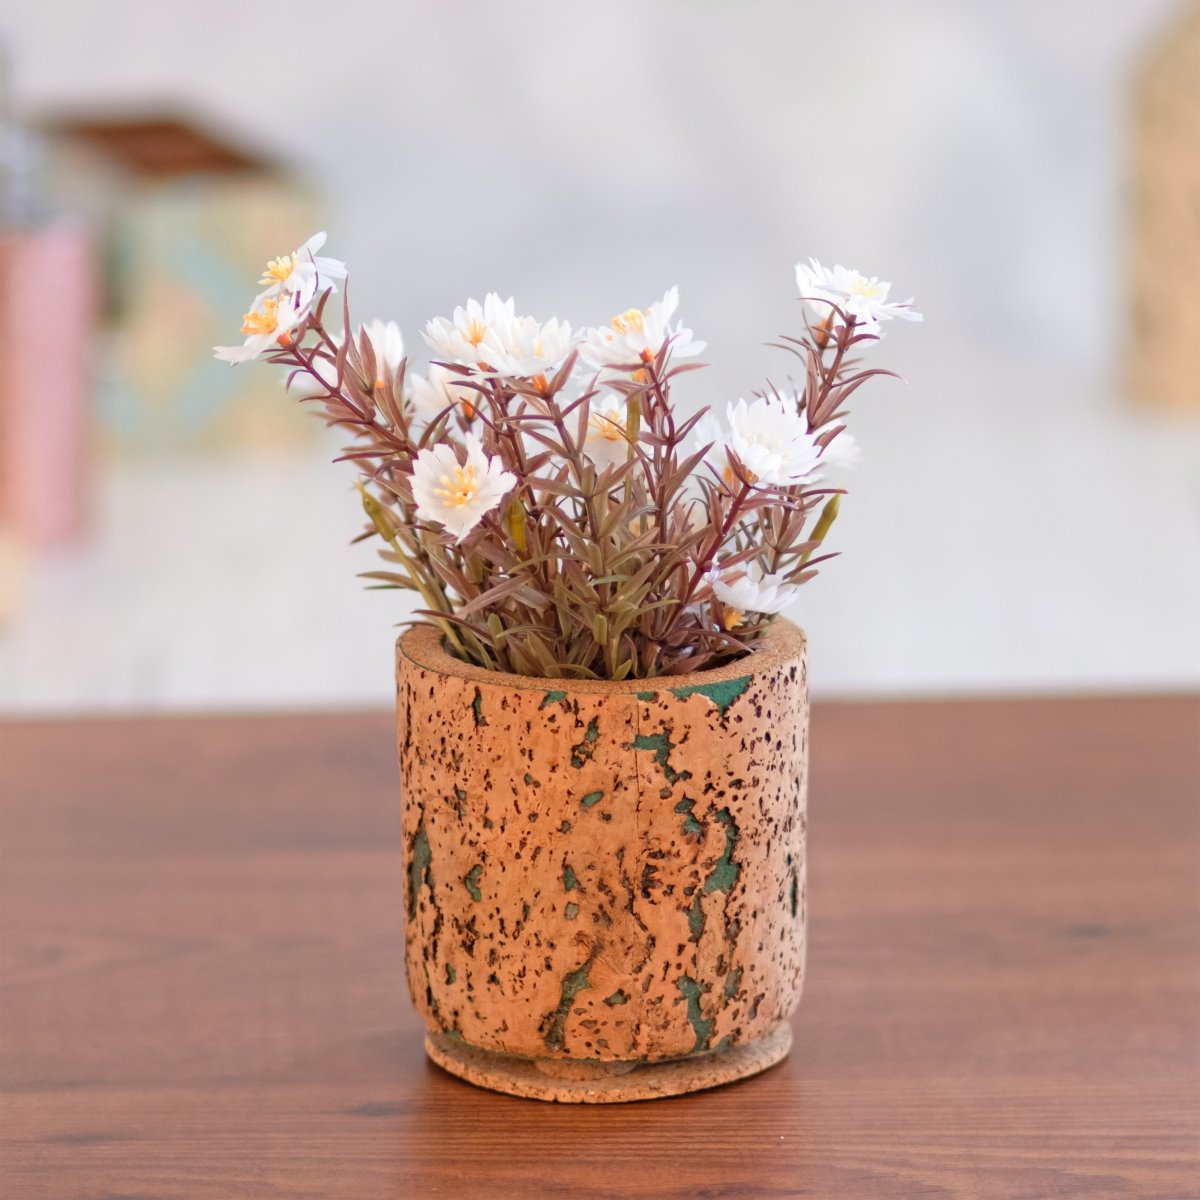 Kezevel Cork Decorative Planter - Natural Cork Brown Cylindrical Indoor Planters for Home Decor, Table Decor, Flower Pot